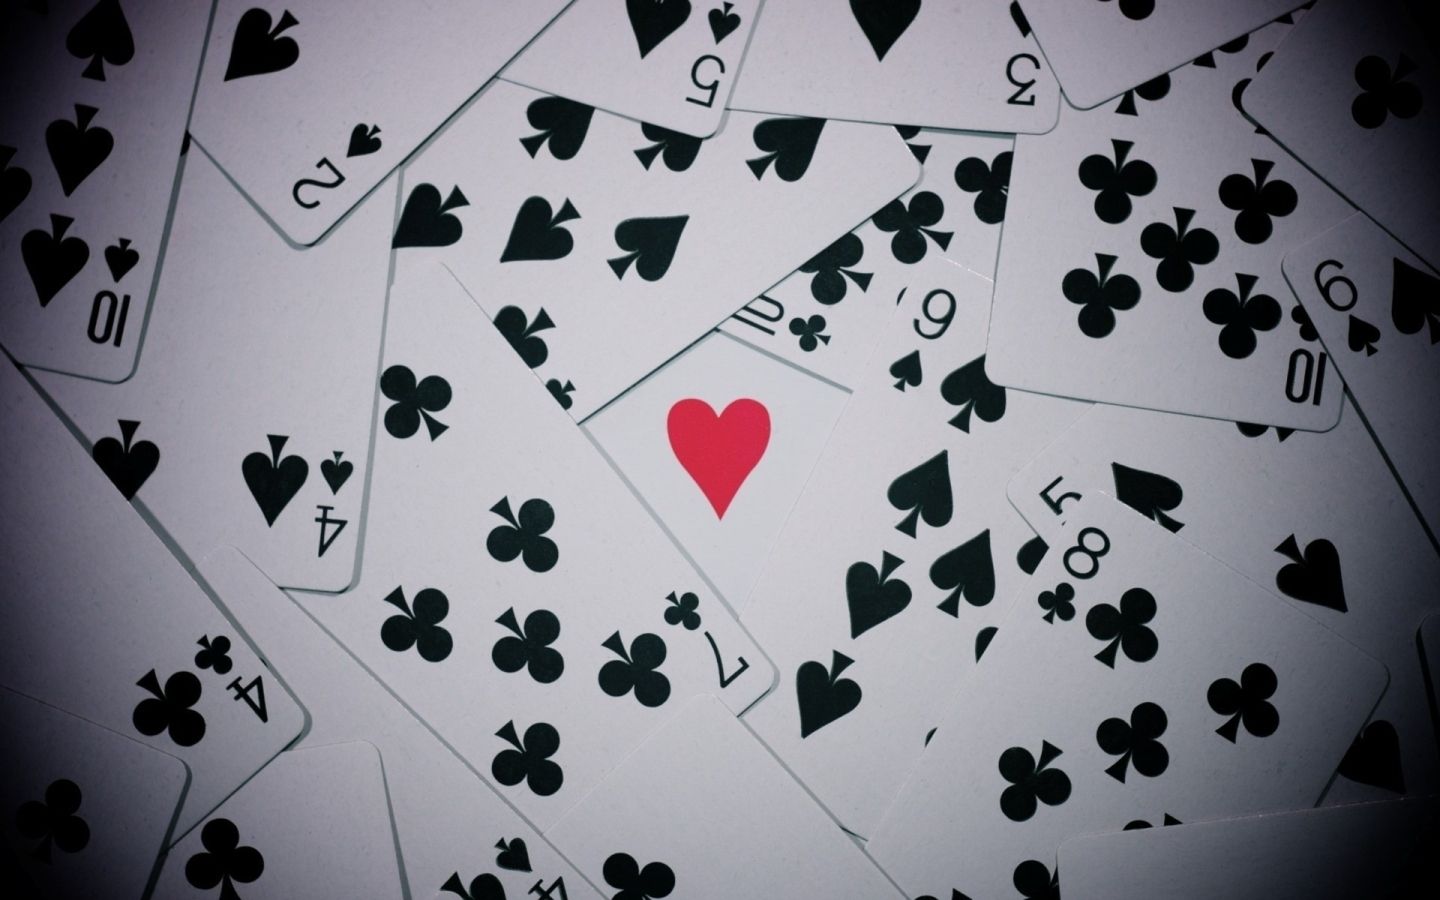 Poker cards Mac Wallpaper Download. Free Mac Wallpaper Download